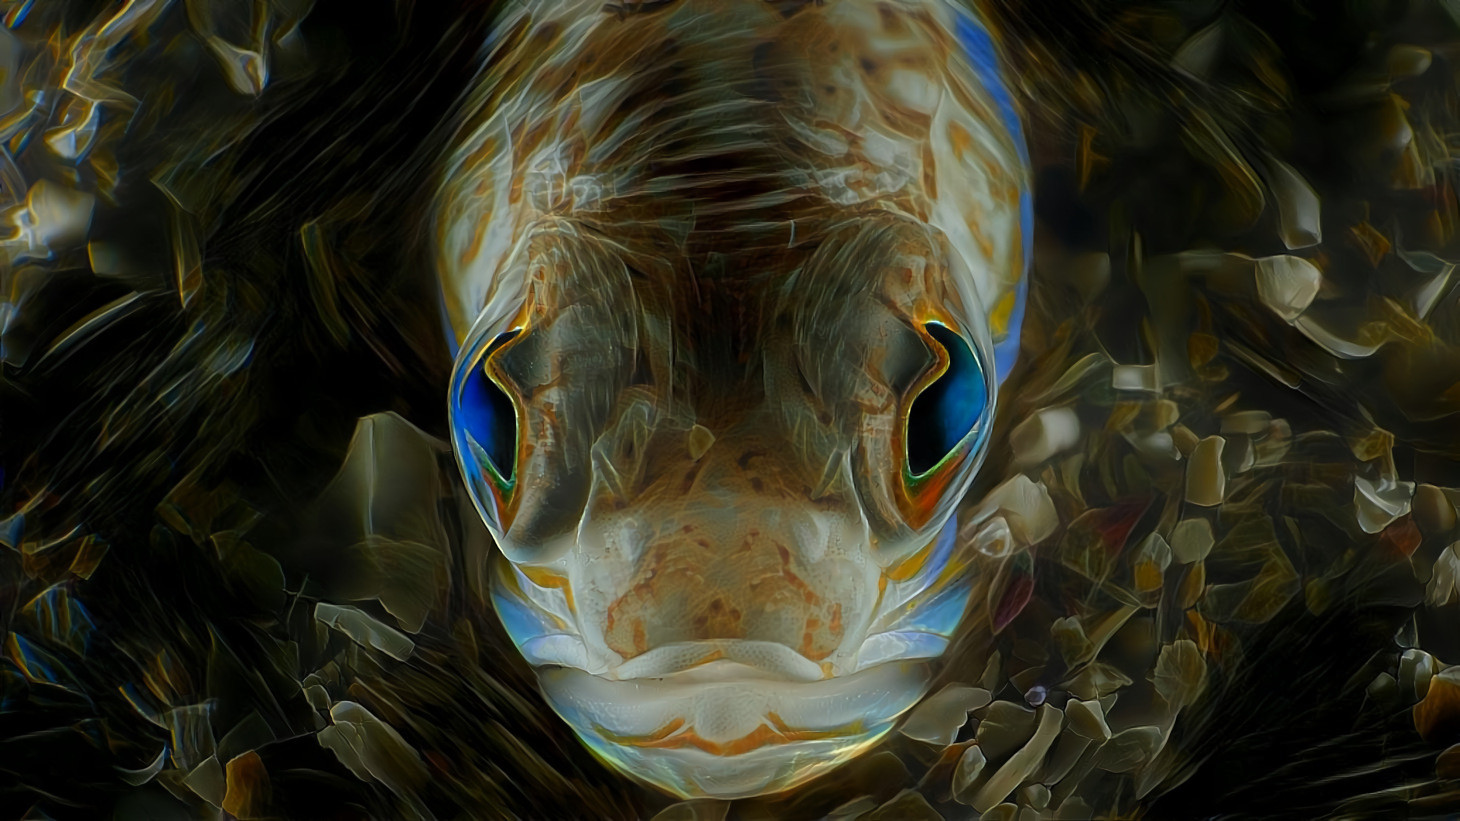 Fish’s Eyes. Original Photograph by Luigi Frunzio On Unsplash. Style introduced by Deep Dreamer Emiliano Pons.